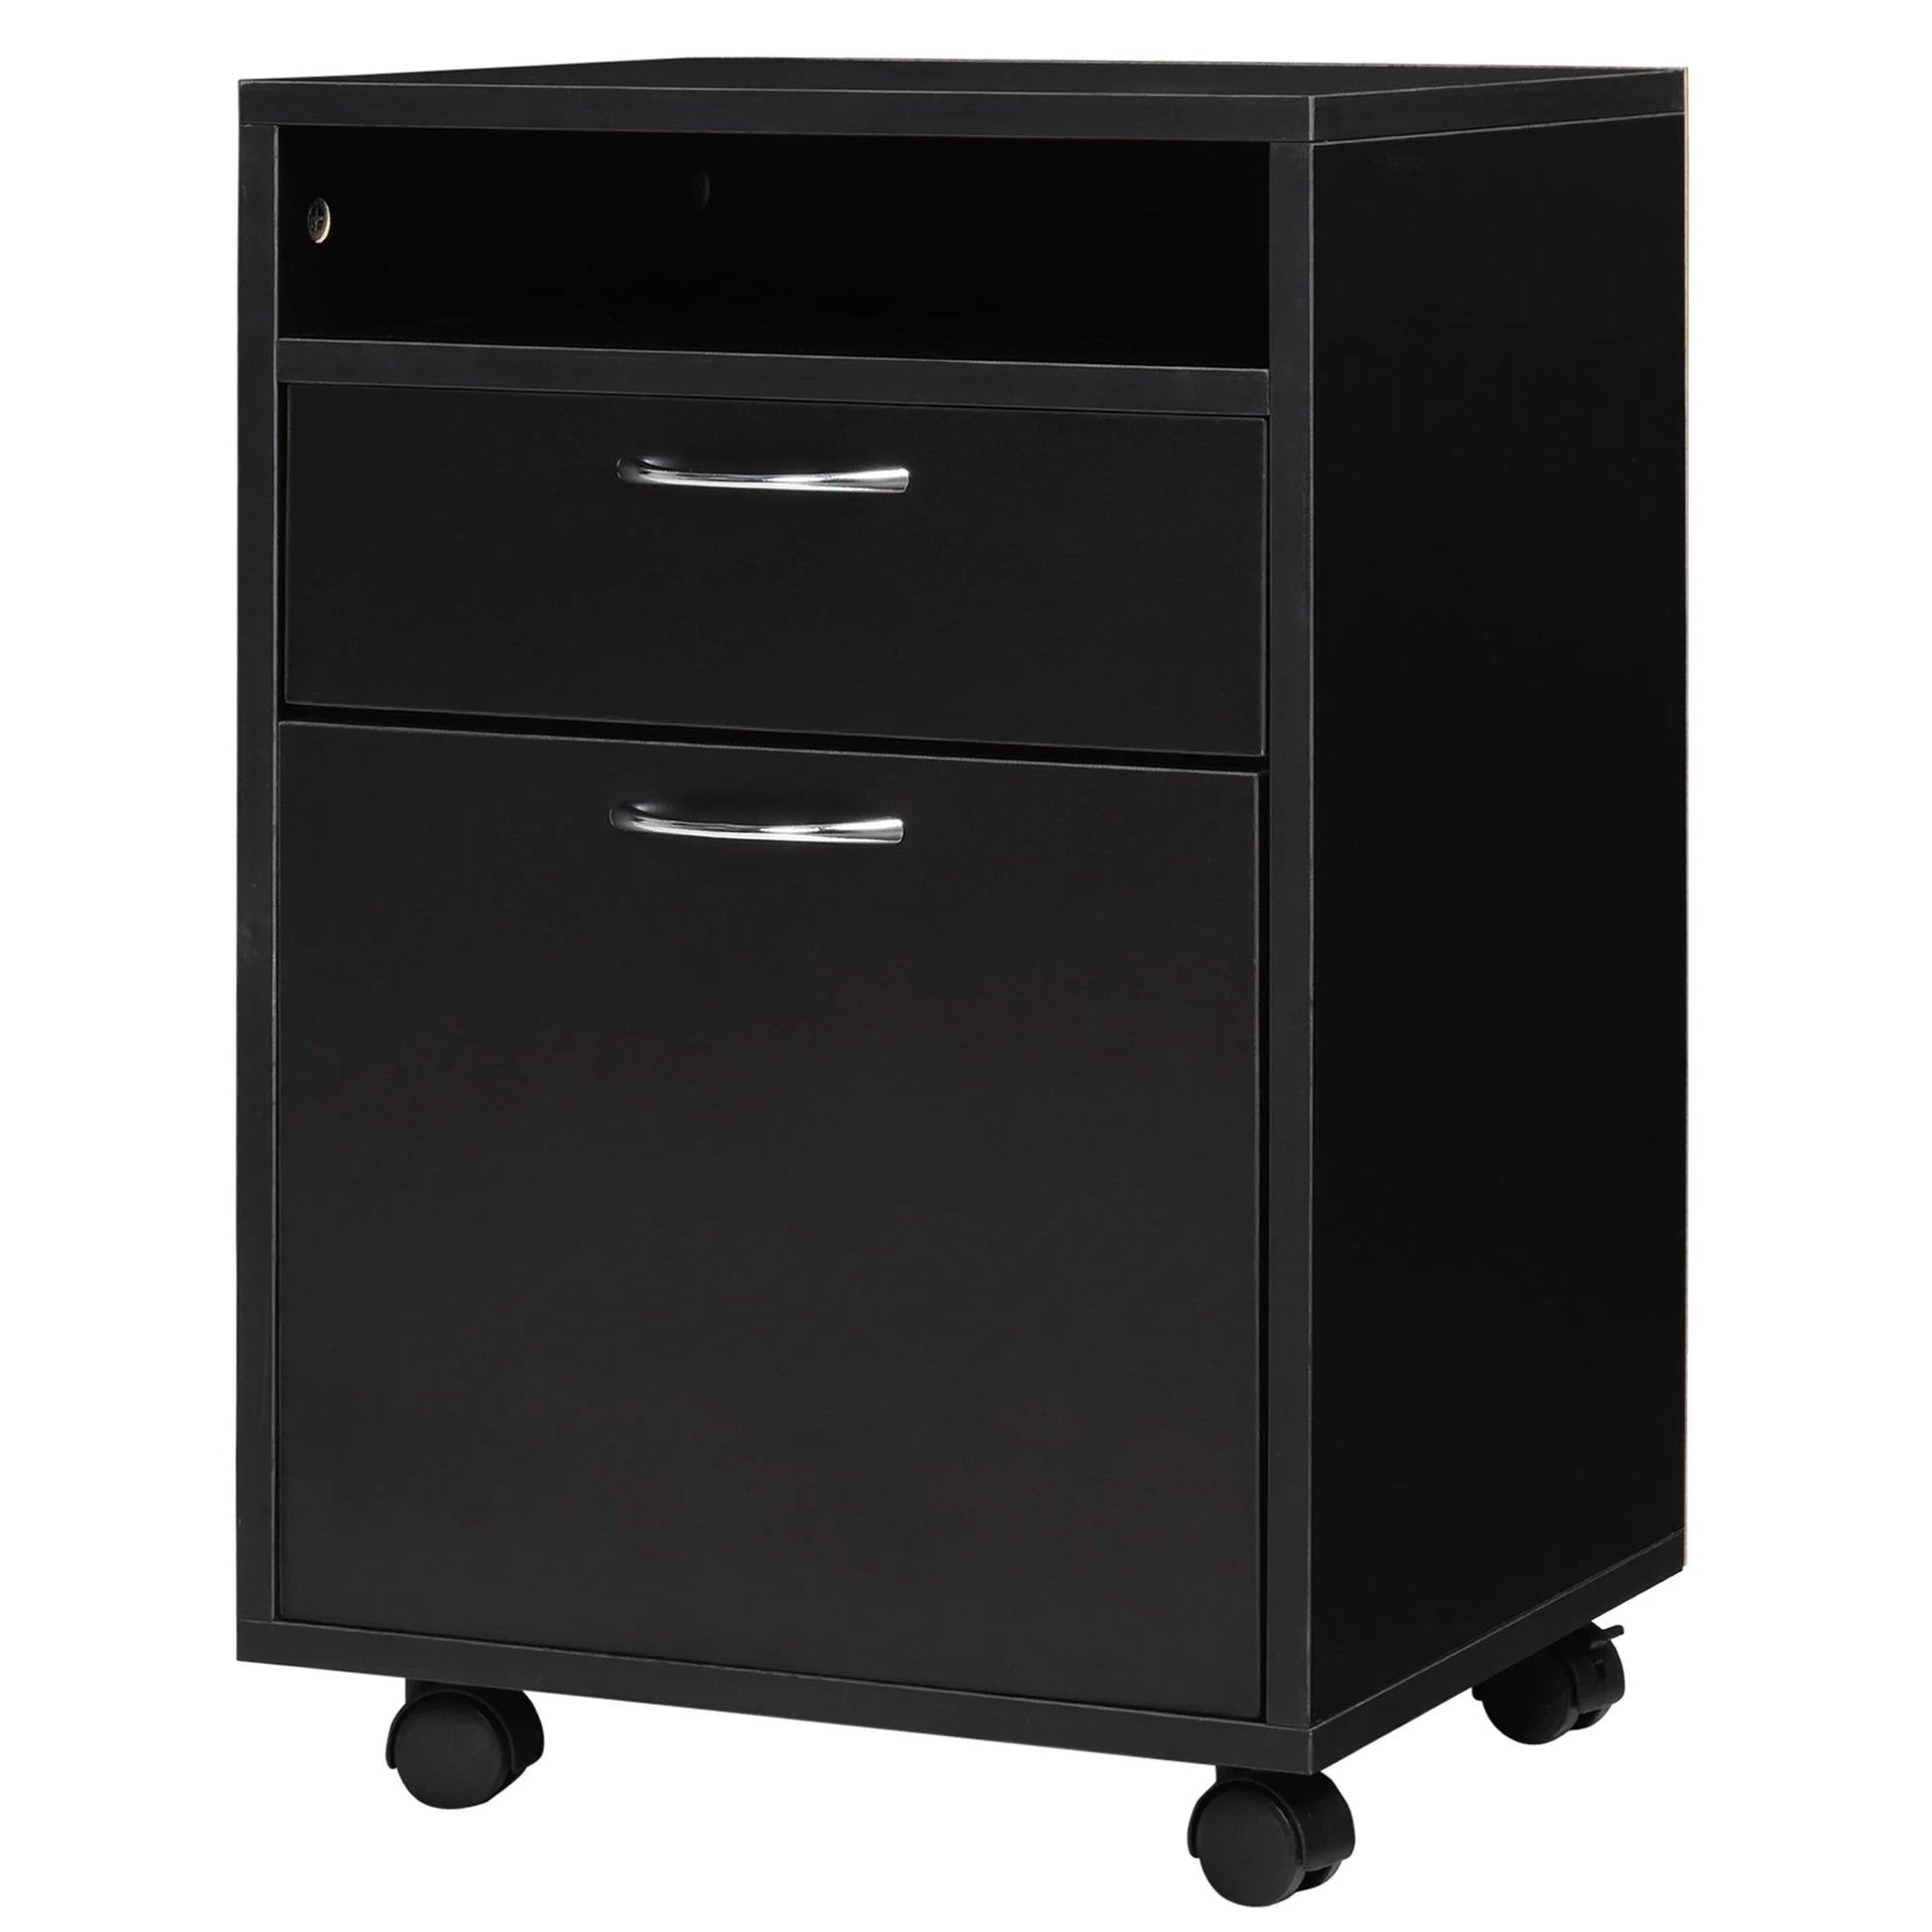 ProperAV Extra 60cm 2-Drawer Office Home Storage Cabinet - maplin.co.uk